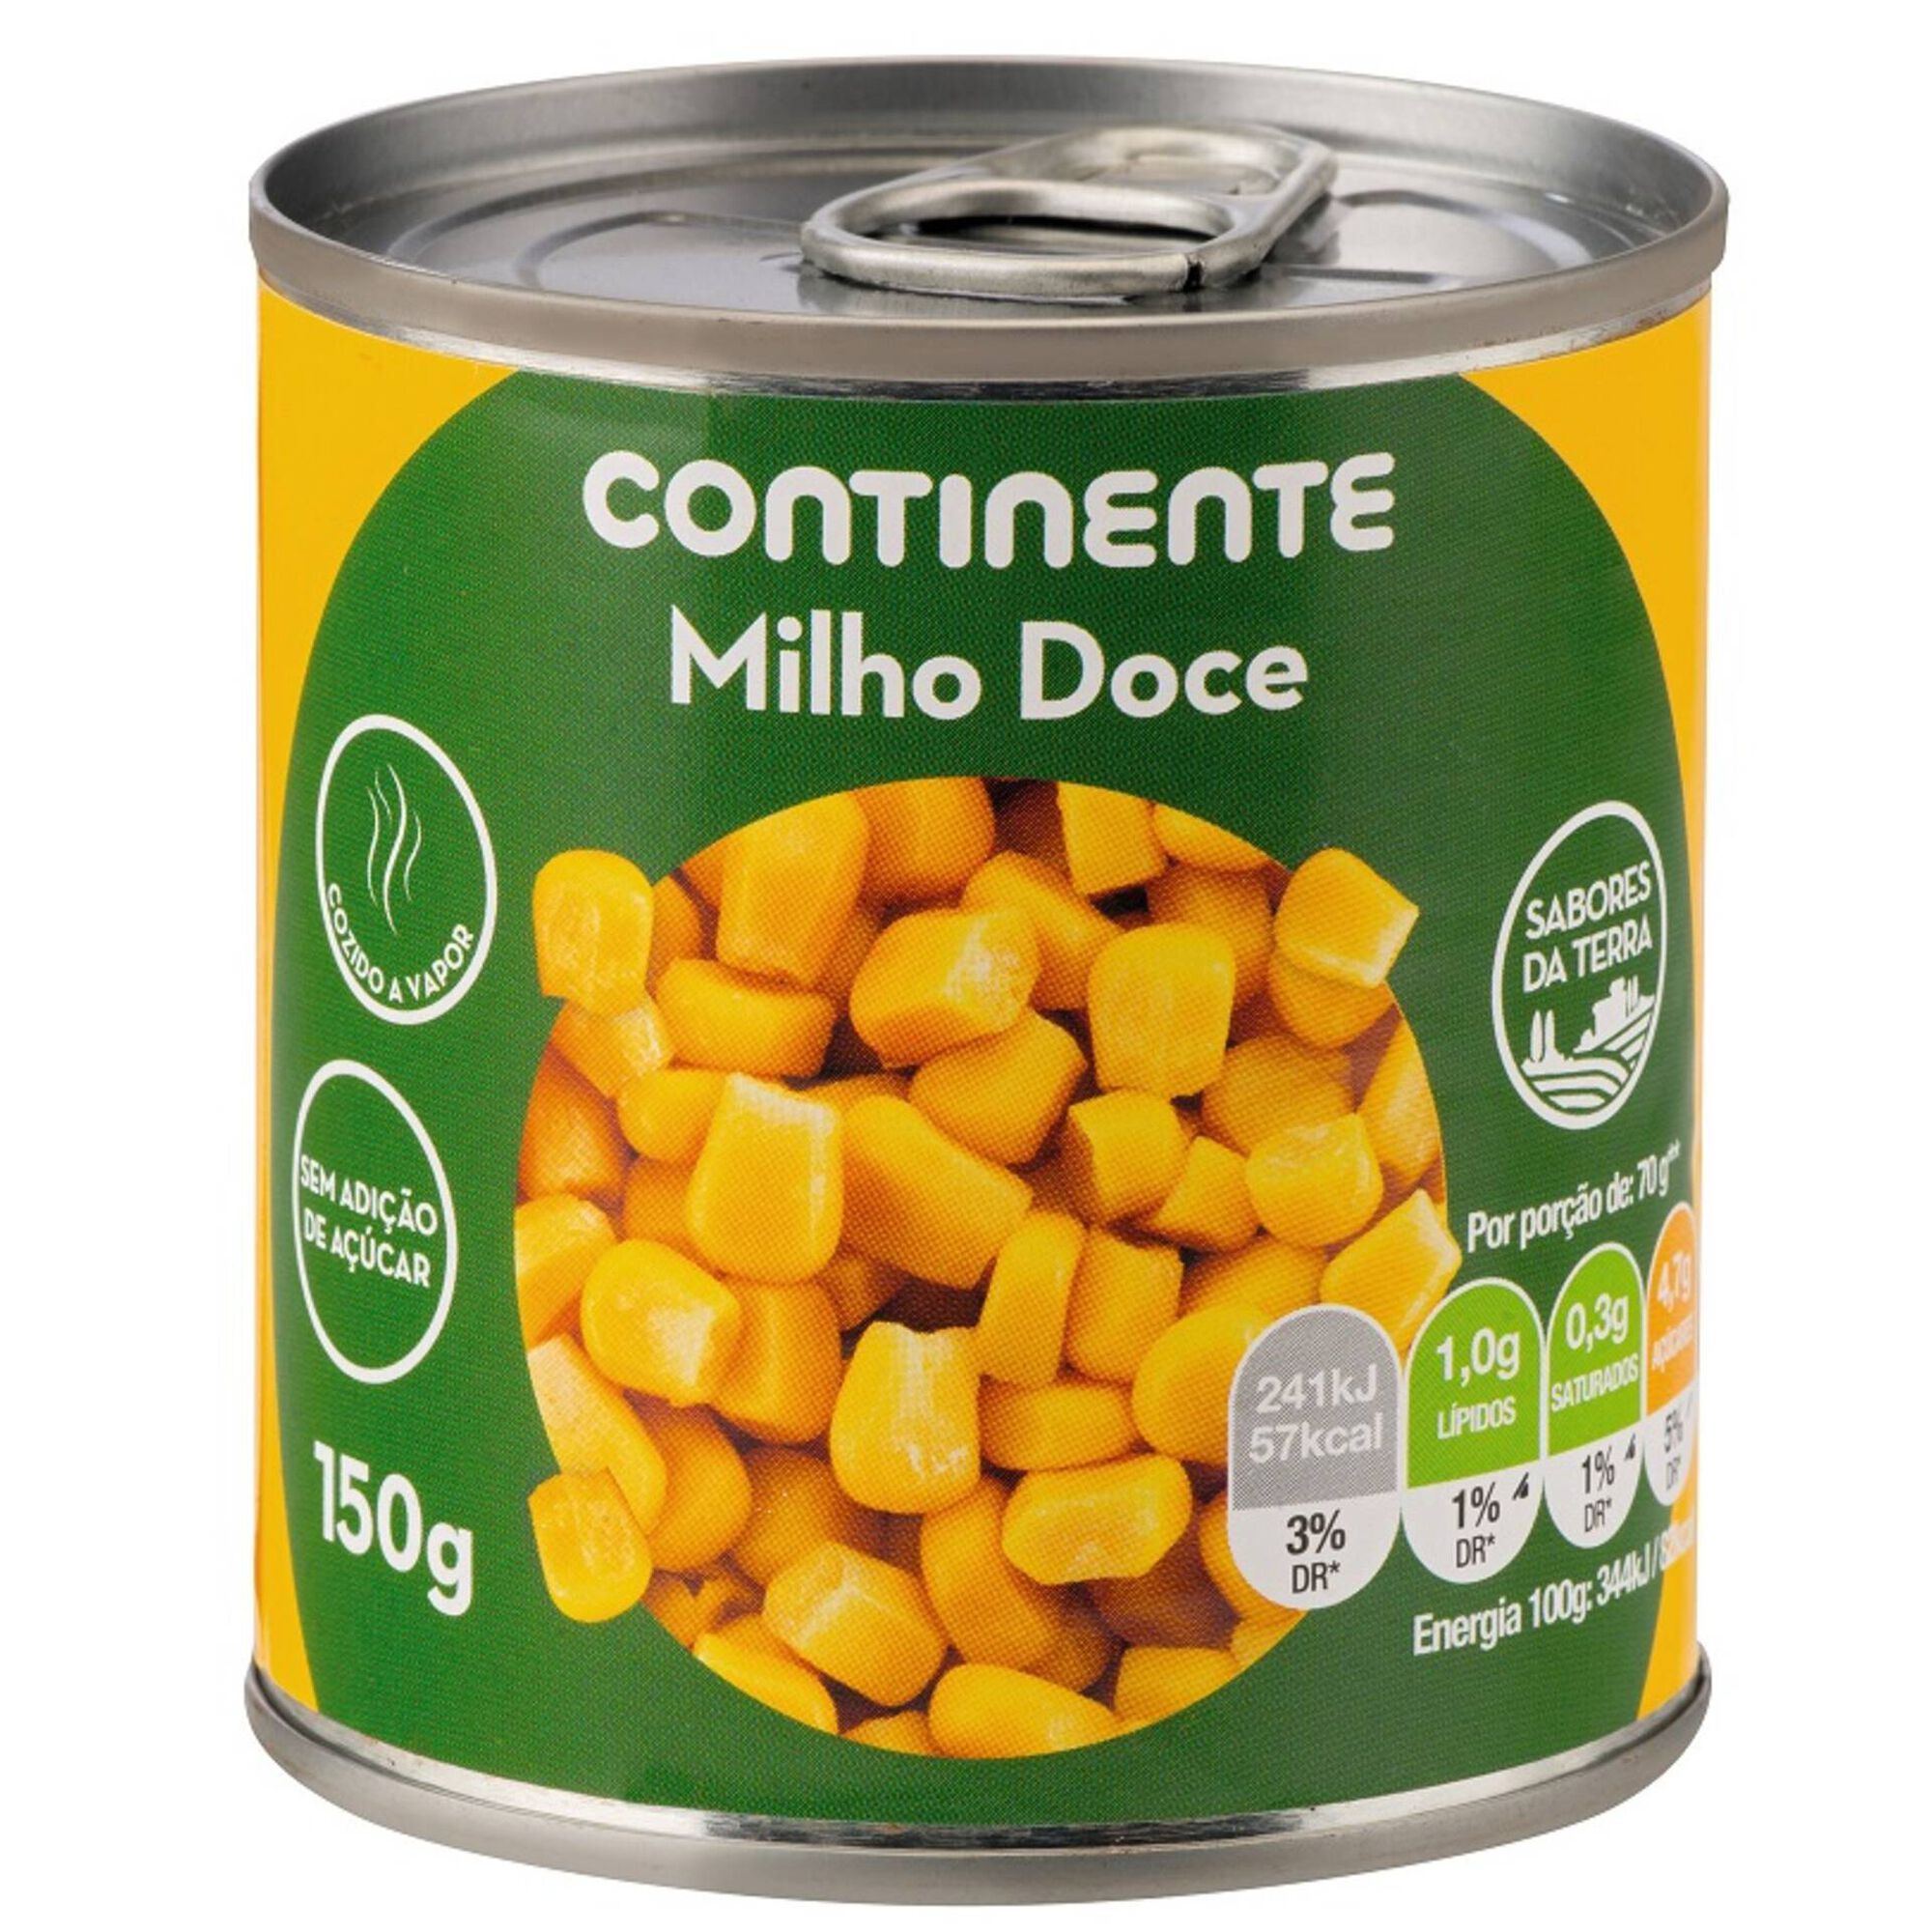 Cereais Corn Flakes Milho - emb. 500 gr - Continente